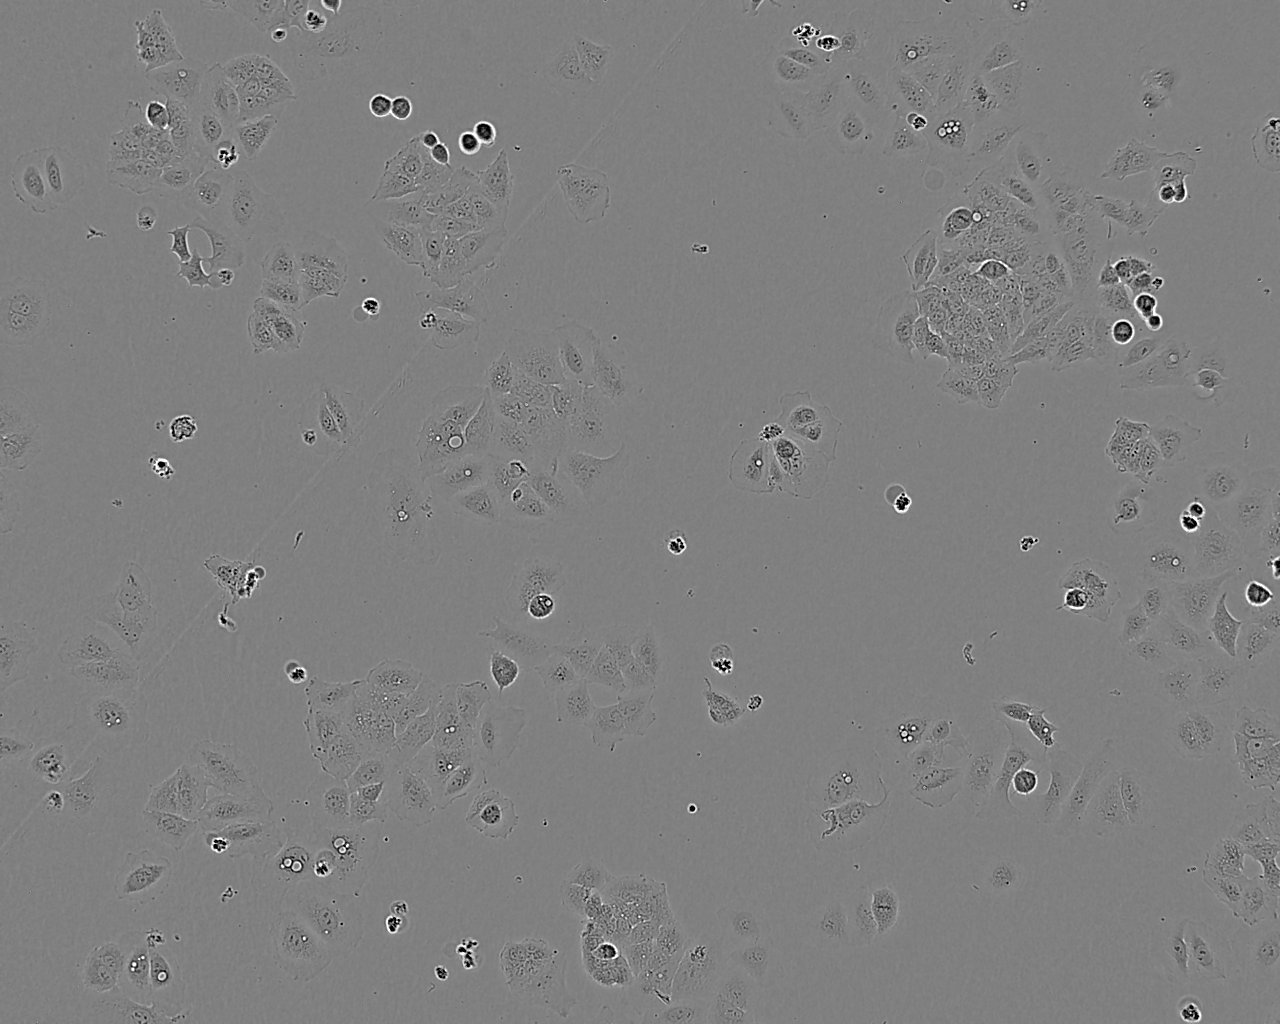 C666-1 epithelioid cells人鼻咽癌细胞系,C666-1 epithelioid cells